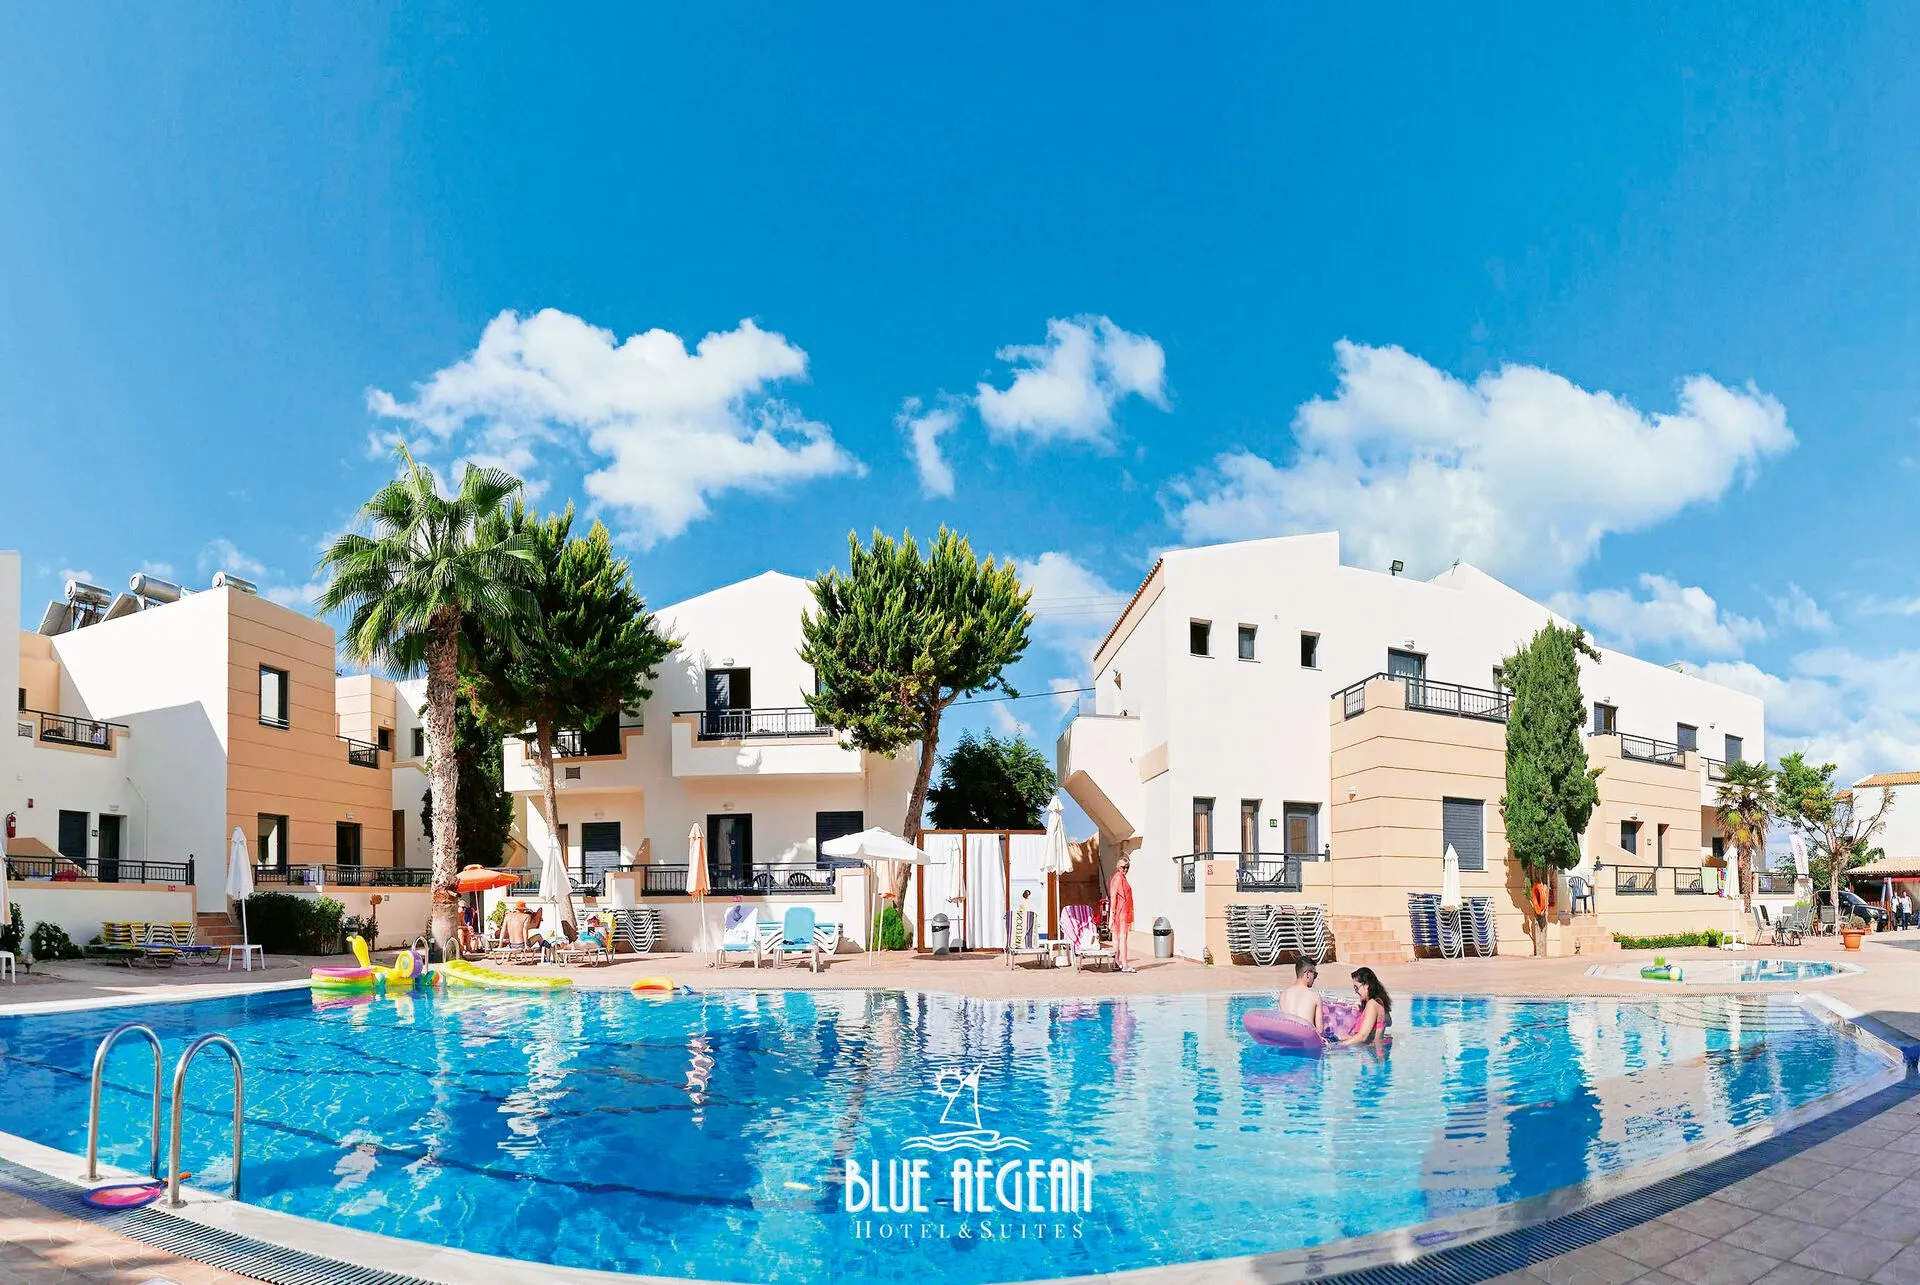 Hôtel Blue Aegean Hotel & Suites 4* - 1